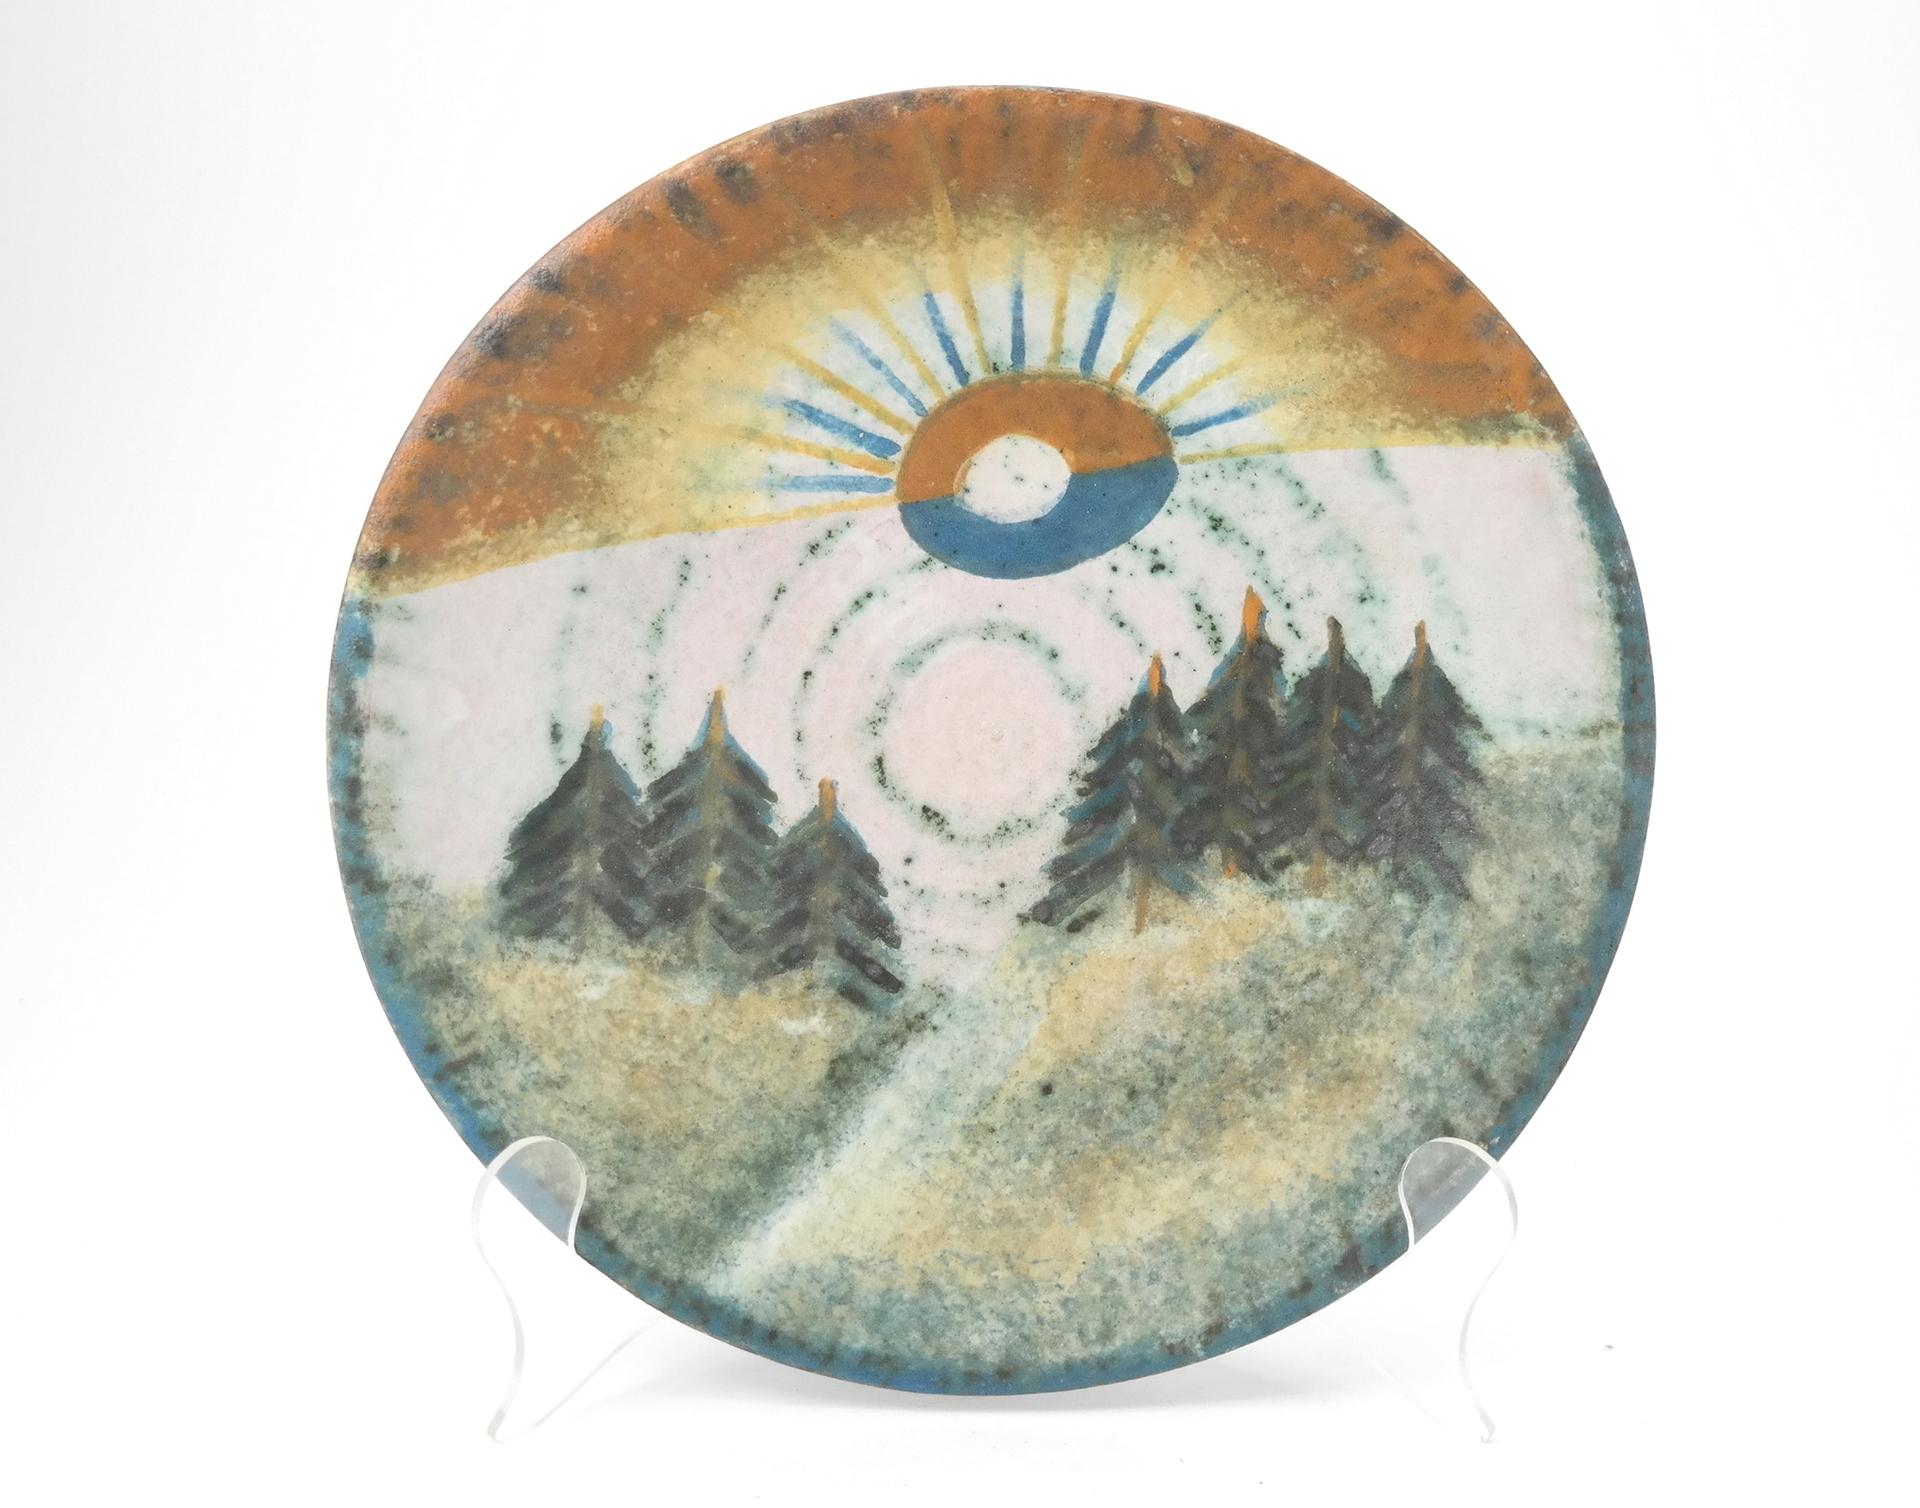 Ceramic artwork decorative plate by Agoston Simo, 1970s.